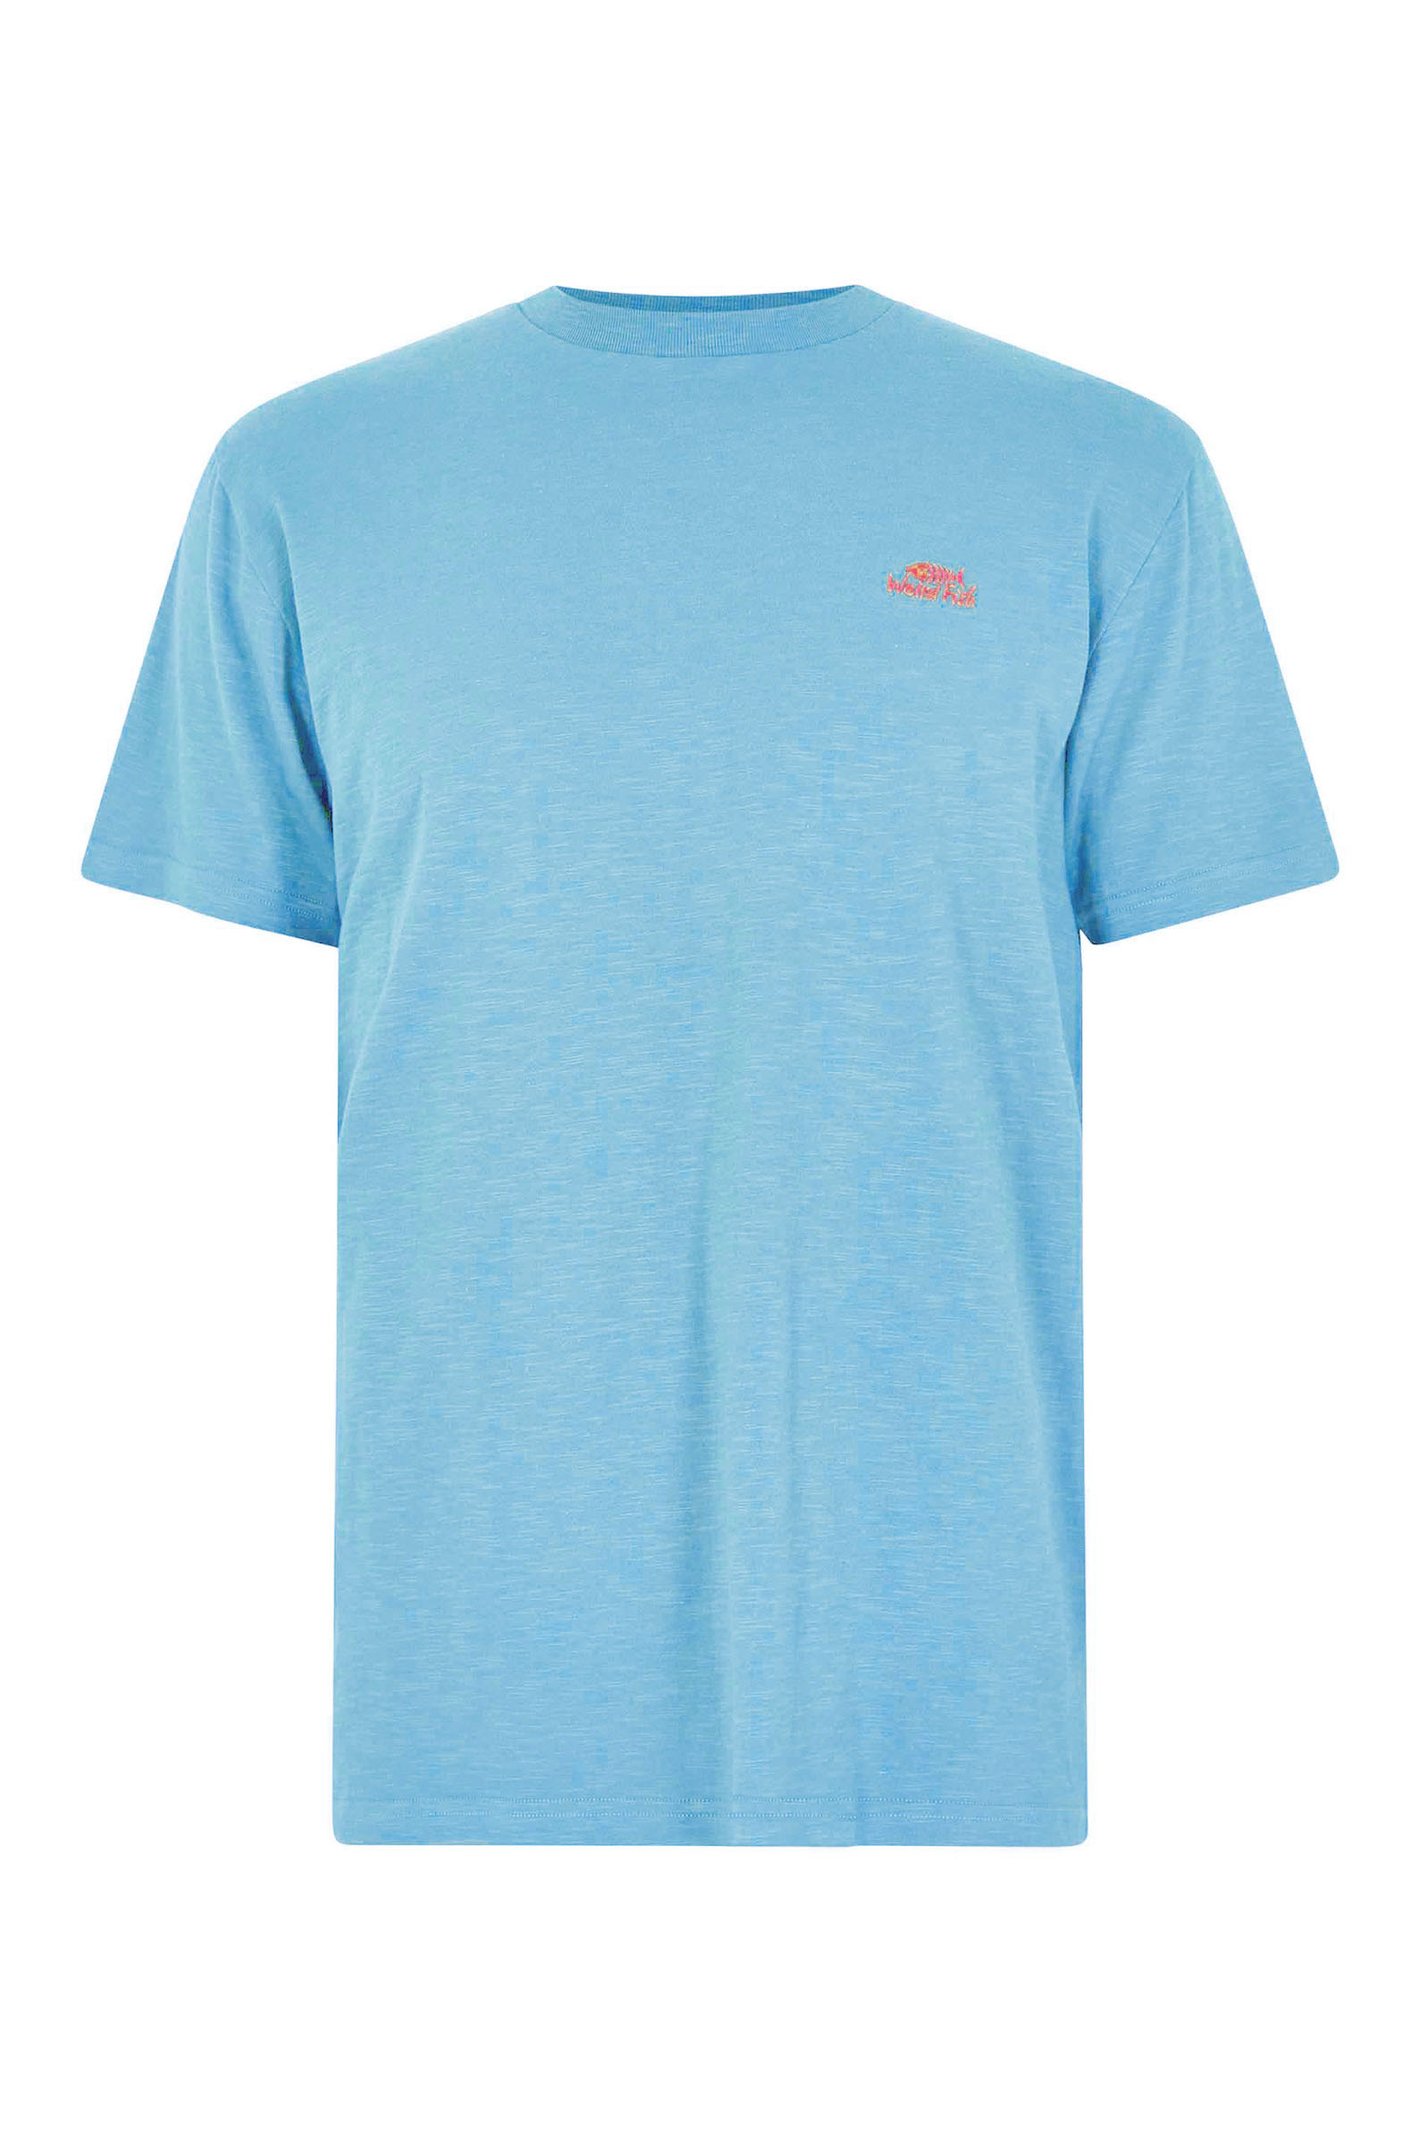 Weird Fish Fished Organic Cotton T-Shirt Sky Blue Size M